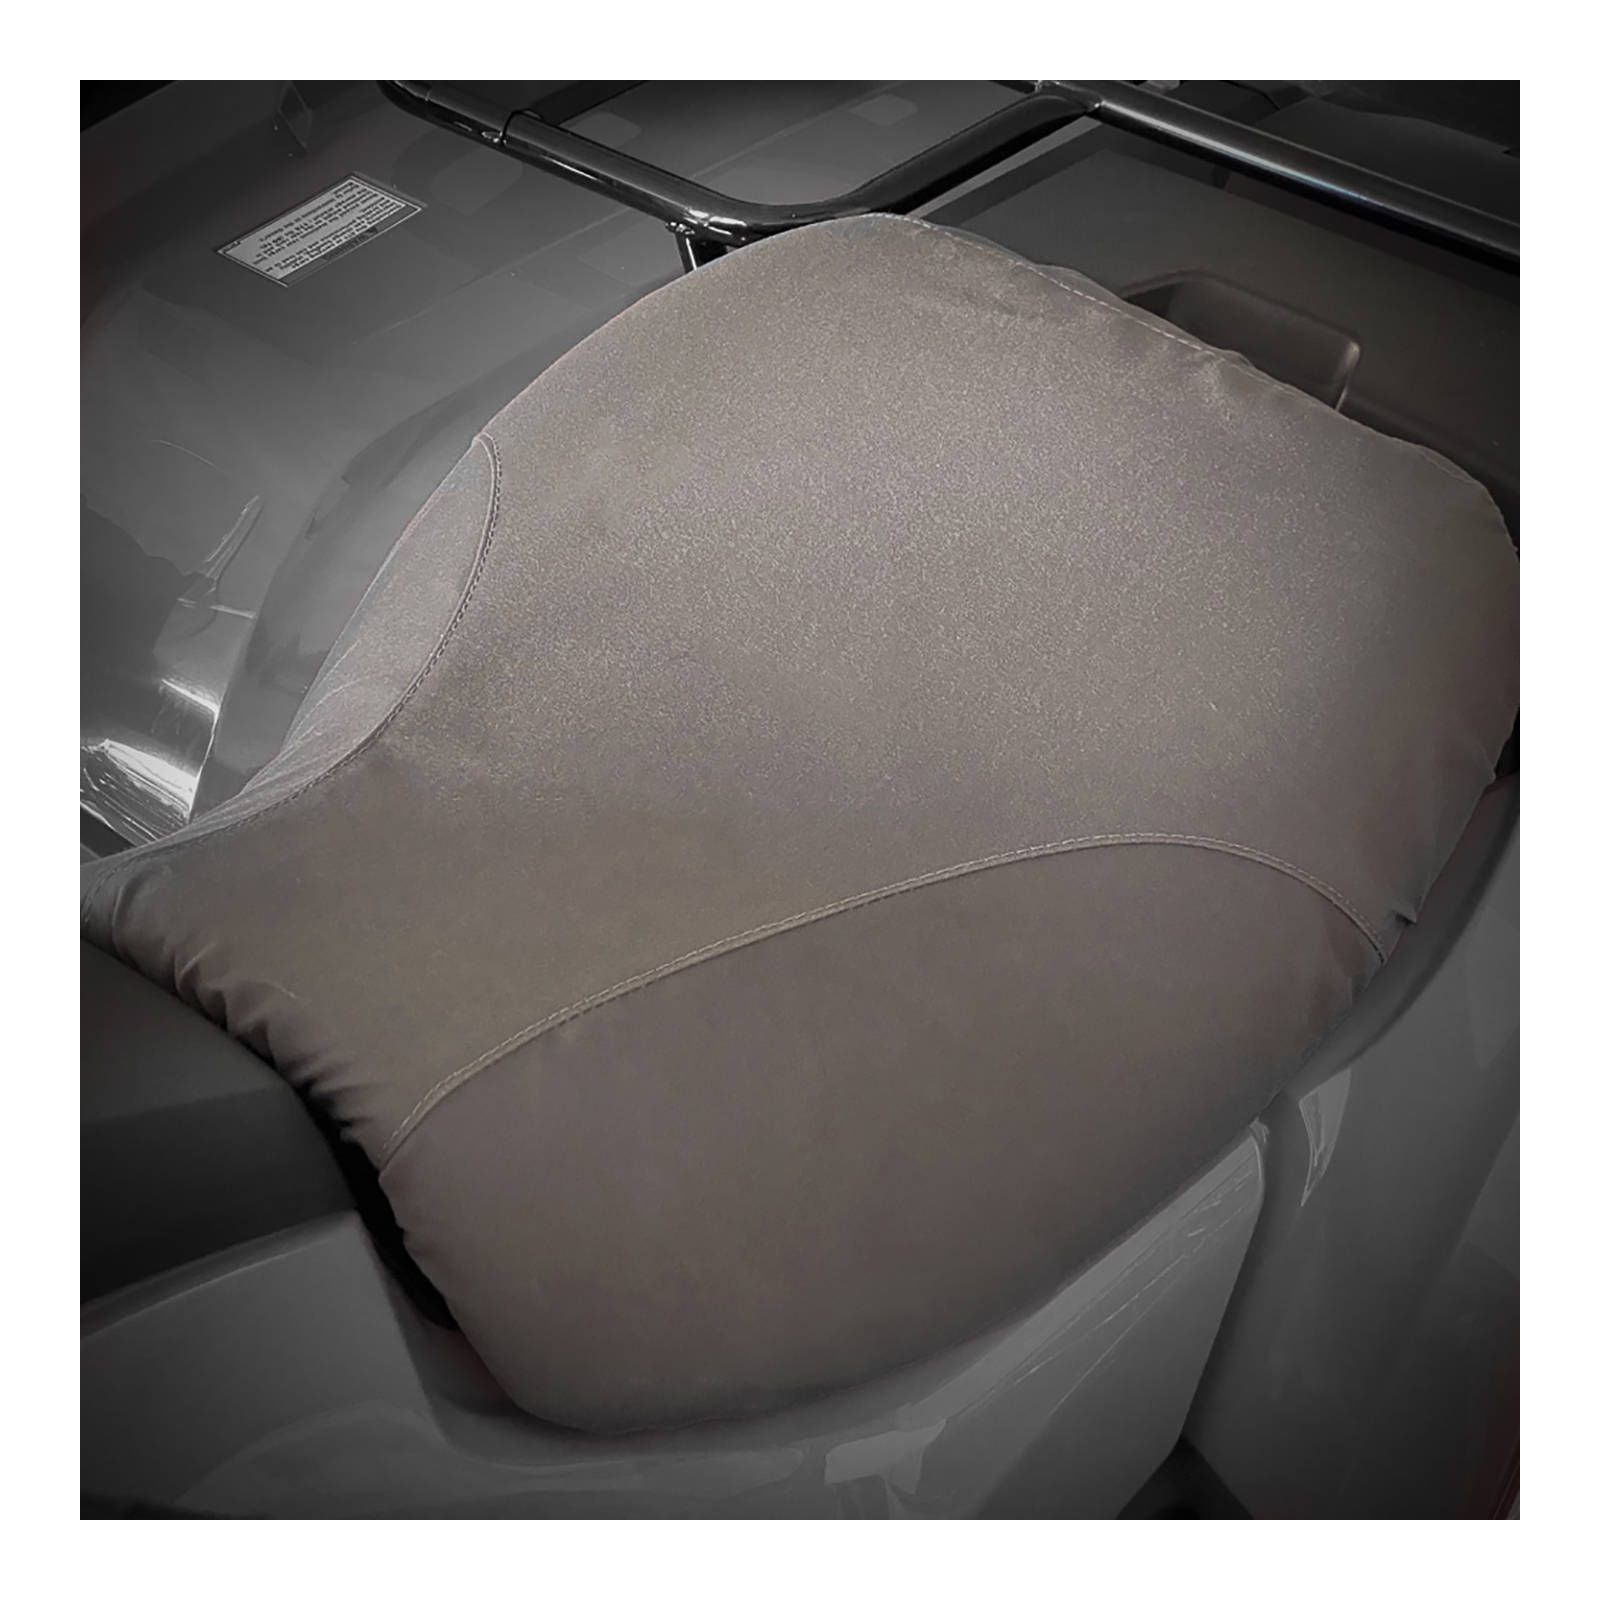 New WHITES Canvas Seat Cover For Suzuki LTA700/750 #WPSCS0407C